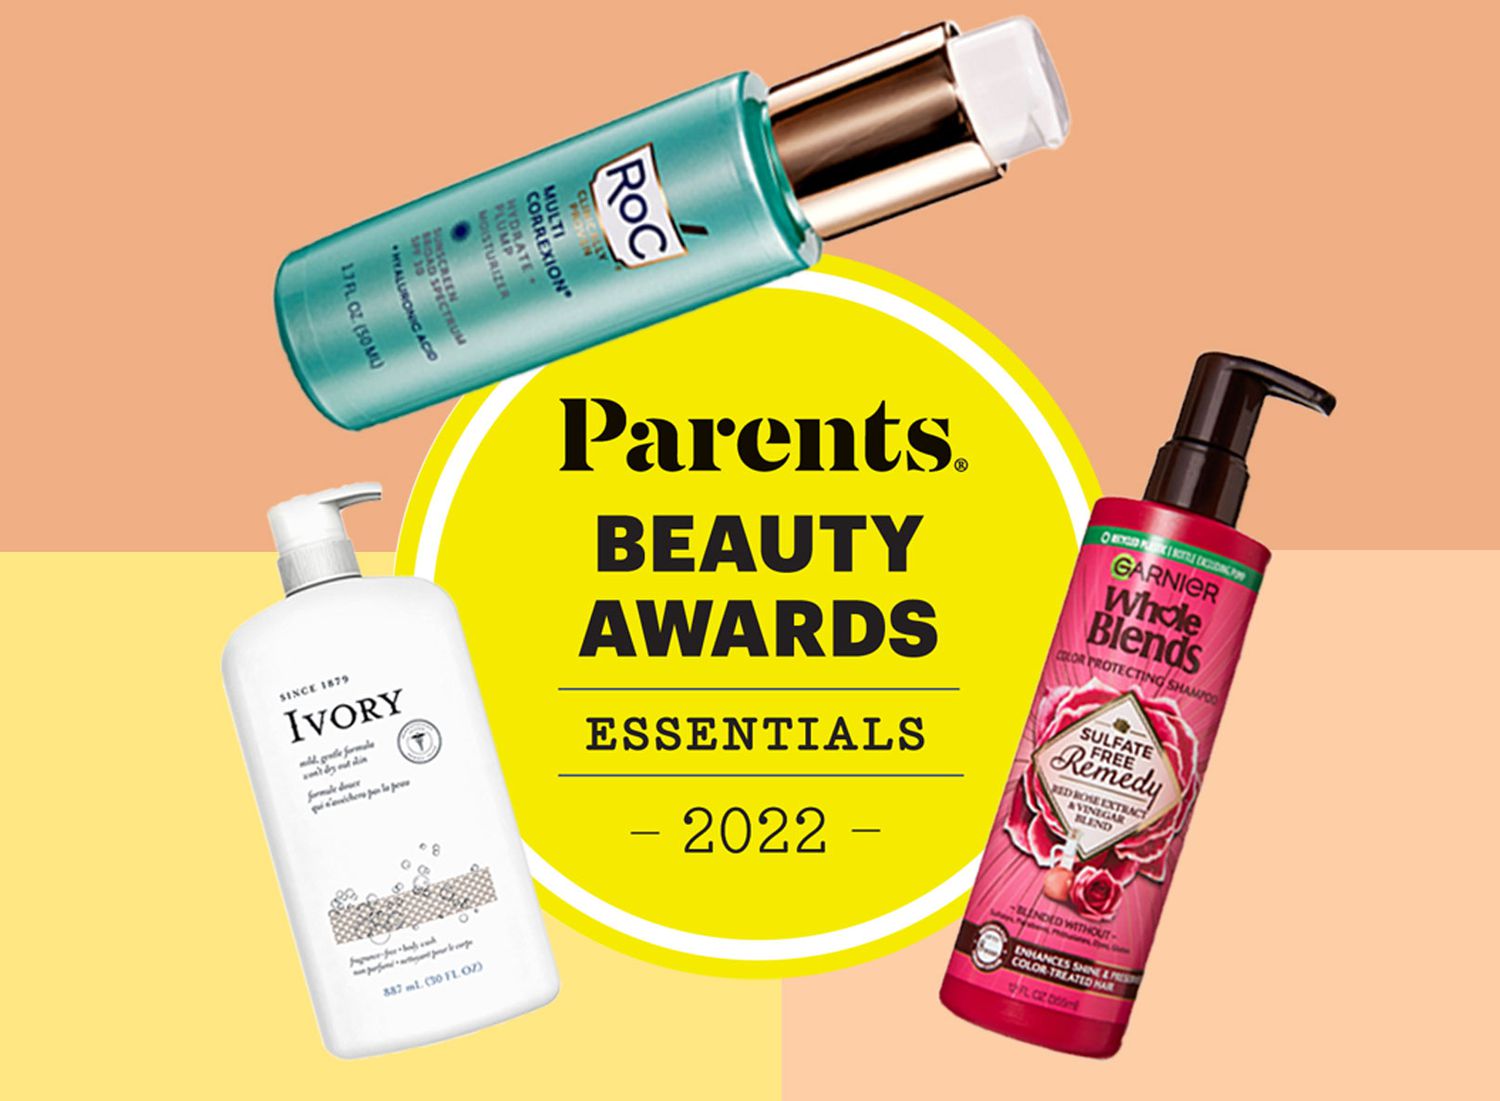 Parents Beauty Awards Essentials 2021